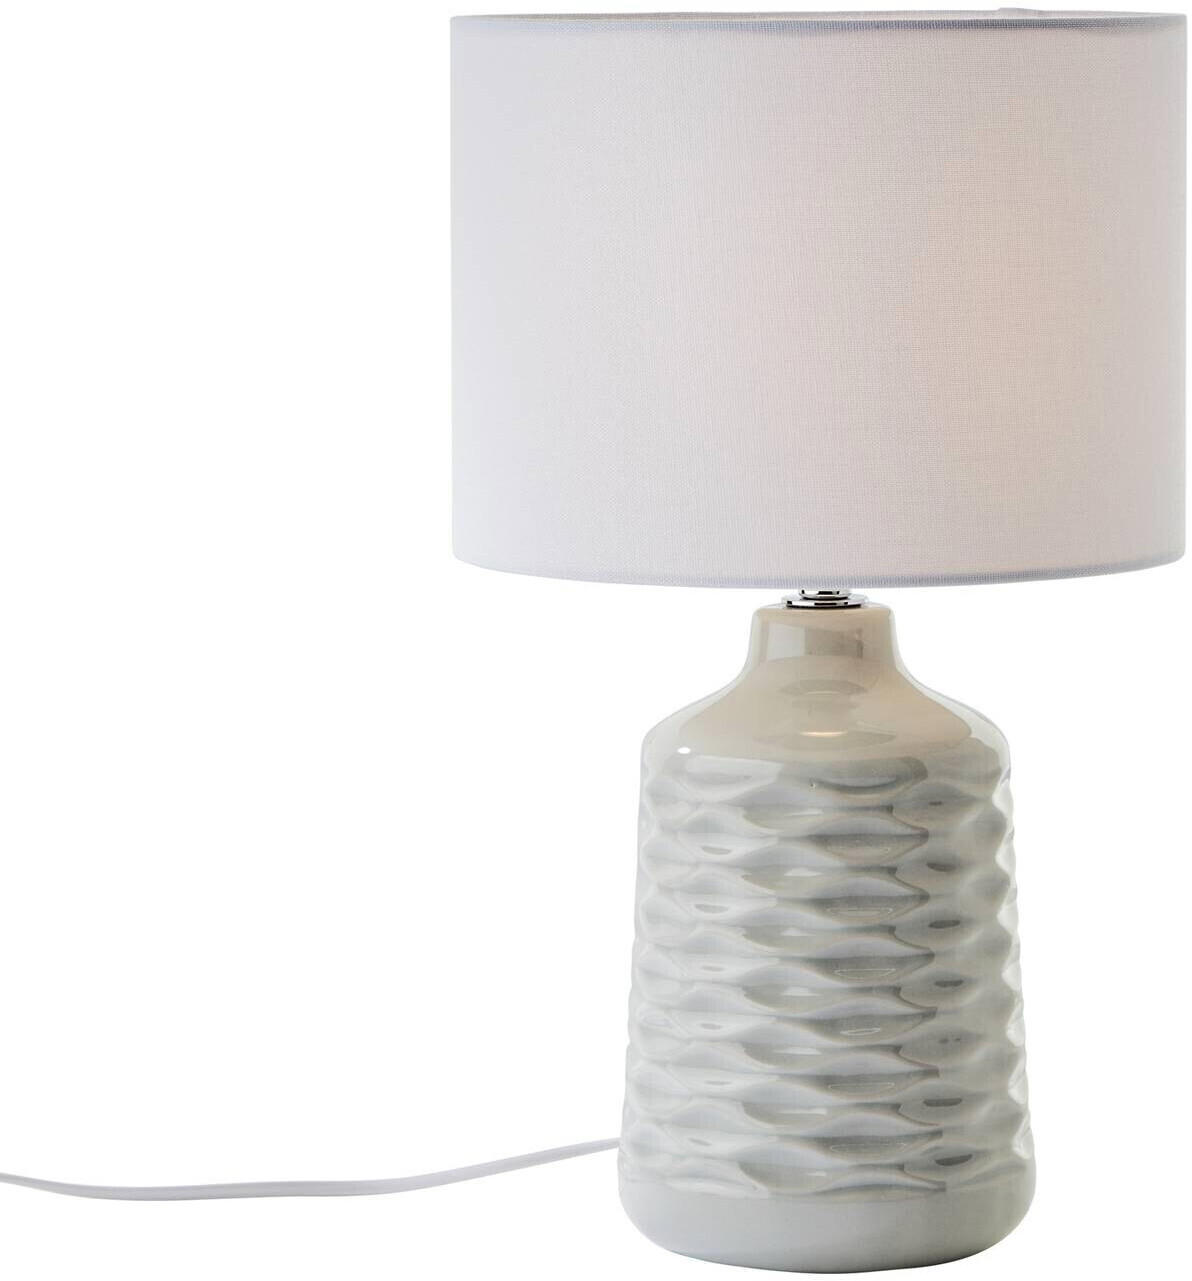 Brilliant Table lamp Ilysa fabric shade white, ceramic base gray